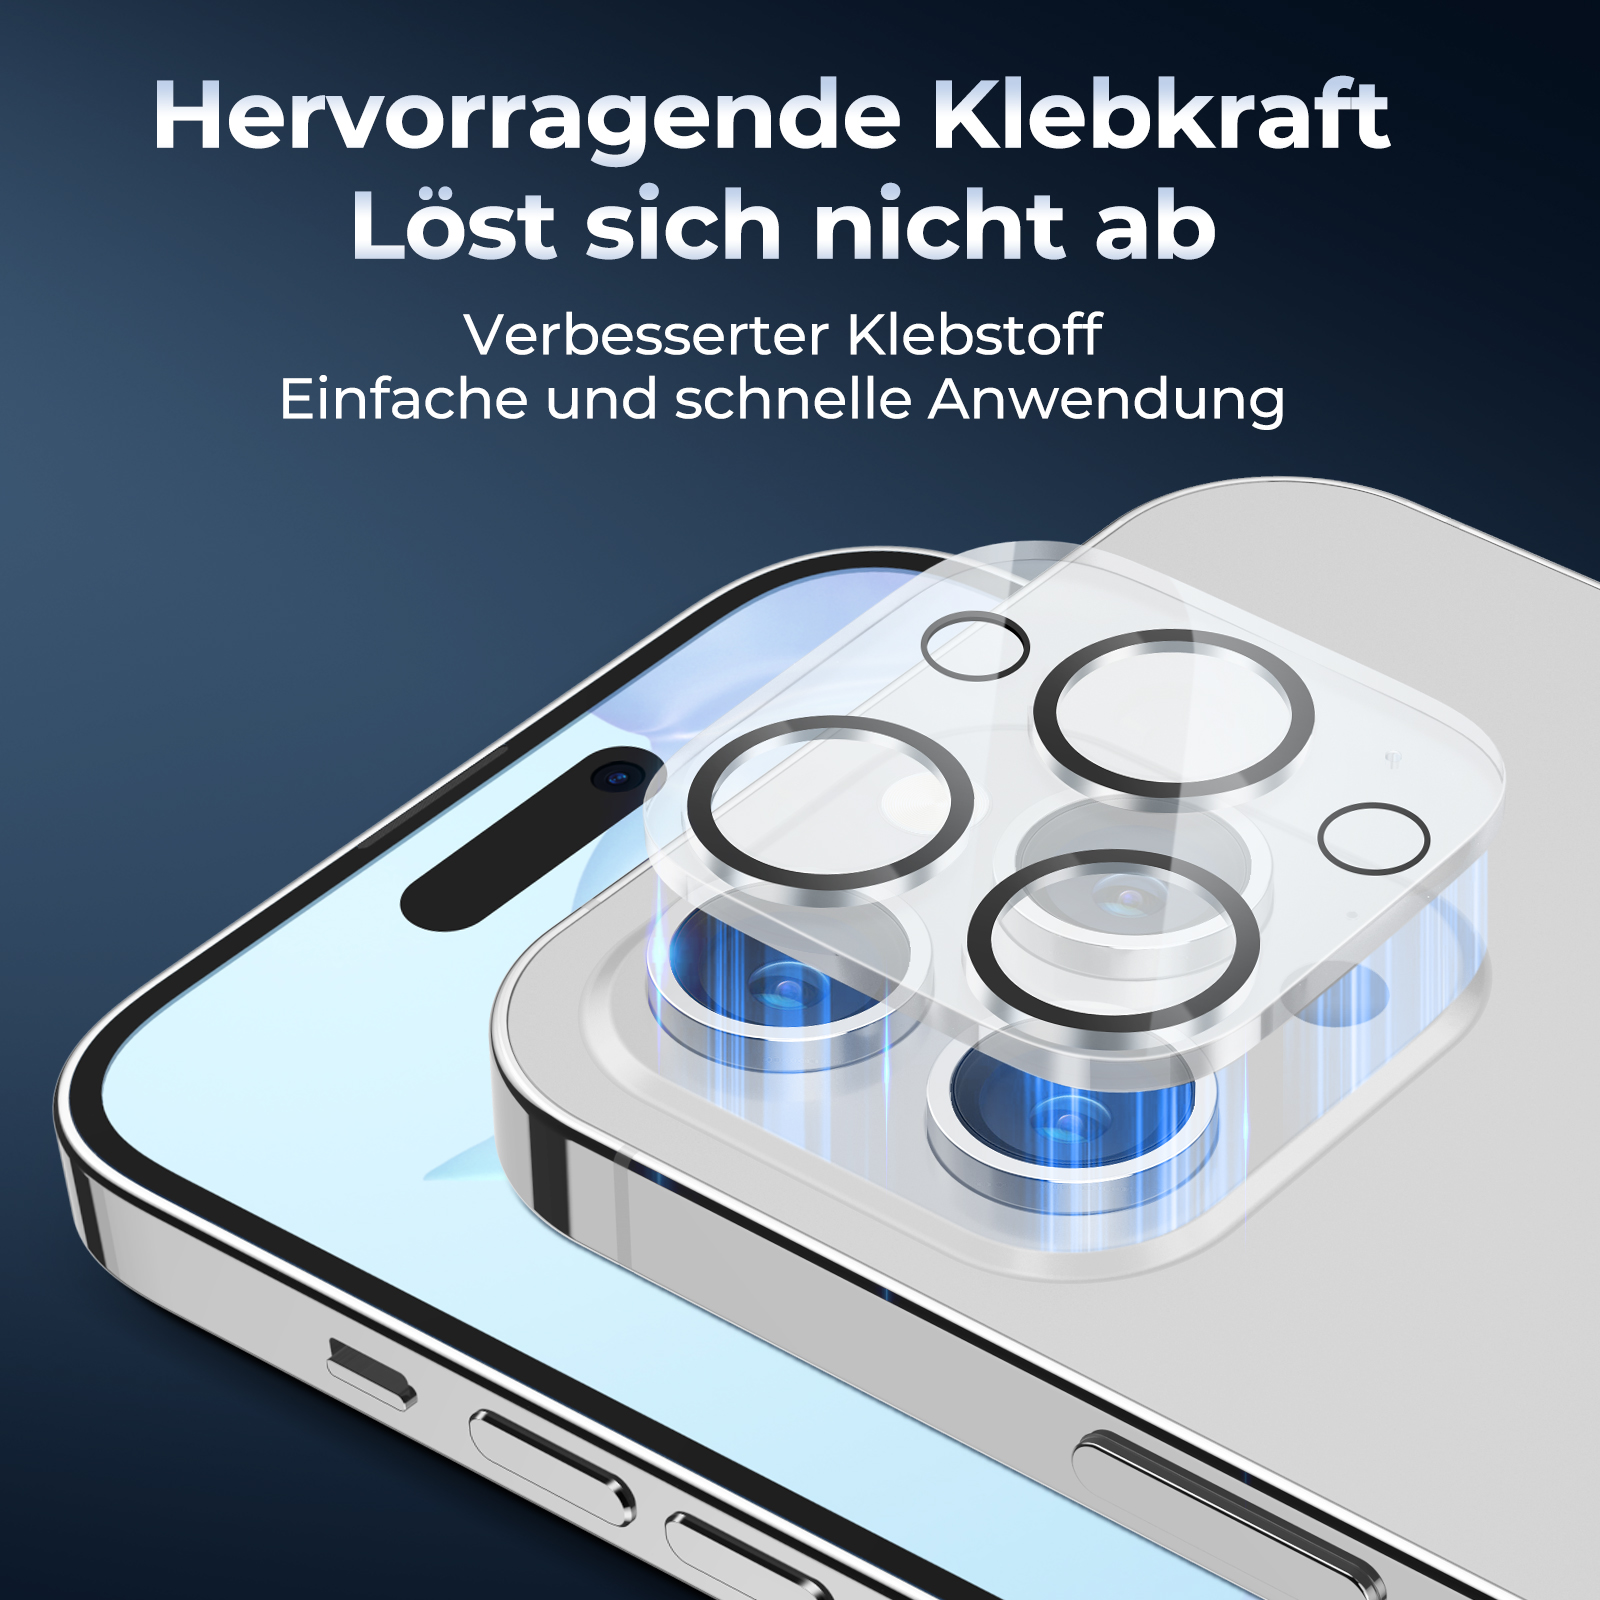 Schutzglas(für Max) 13 Apple iPhone MOBSTORE Pro;iPhone Kameraobjektivschutz Pro 13